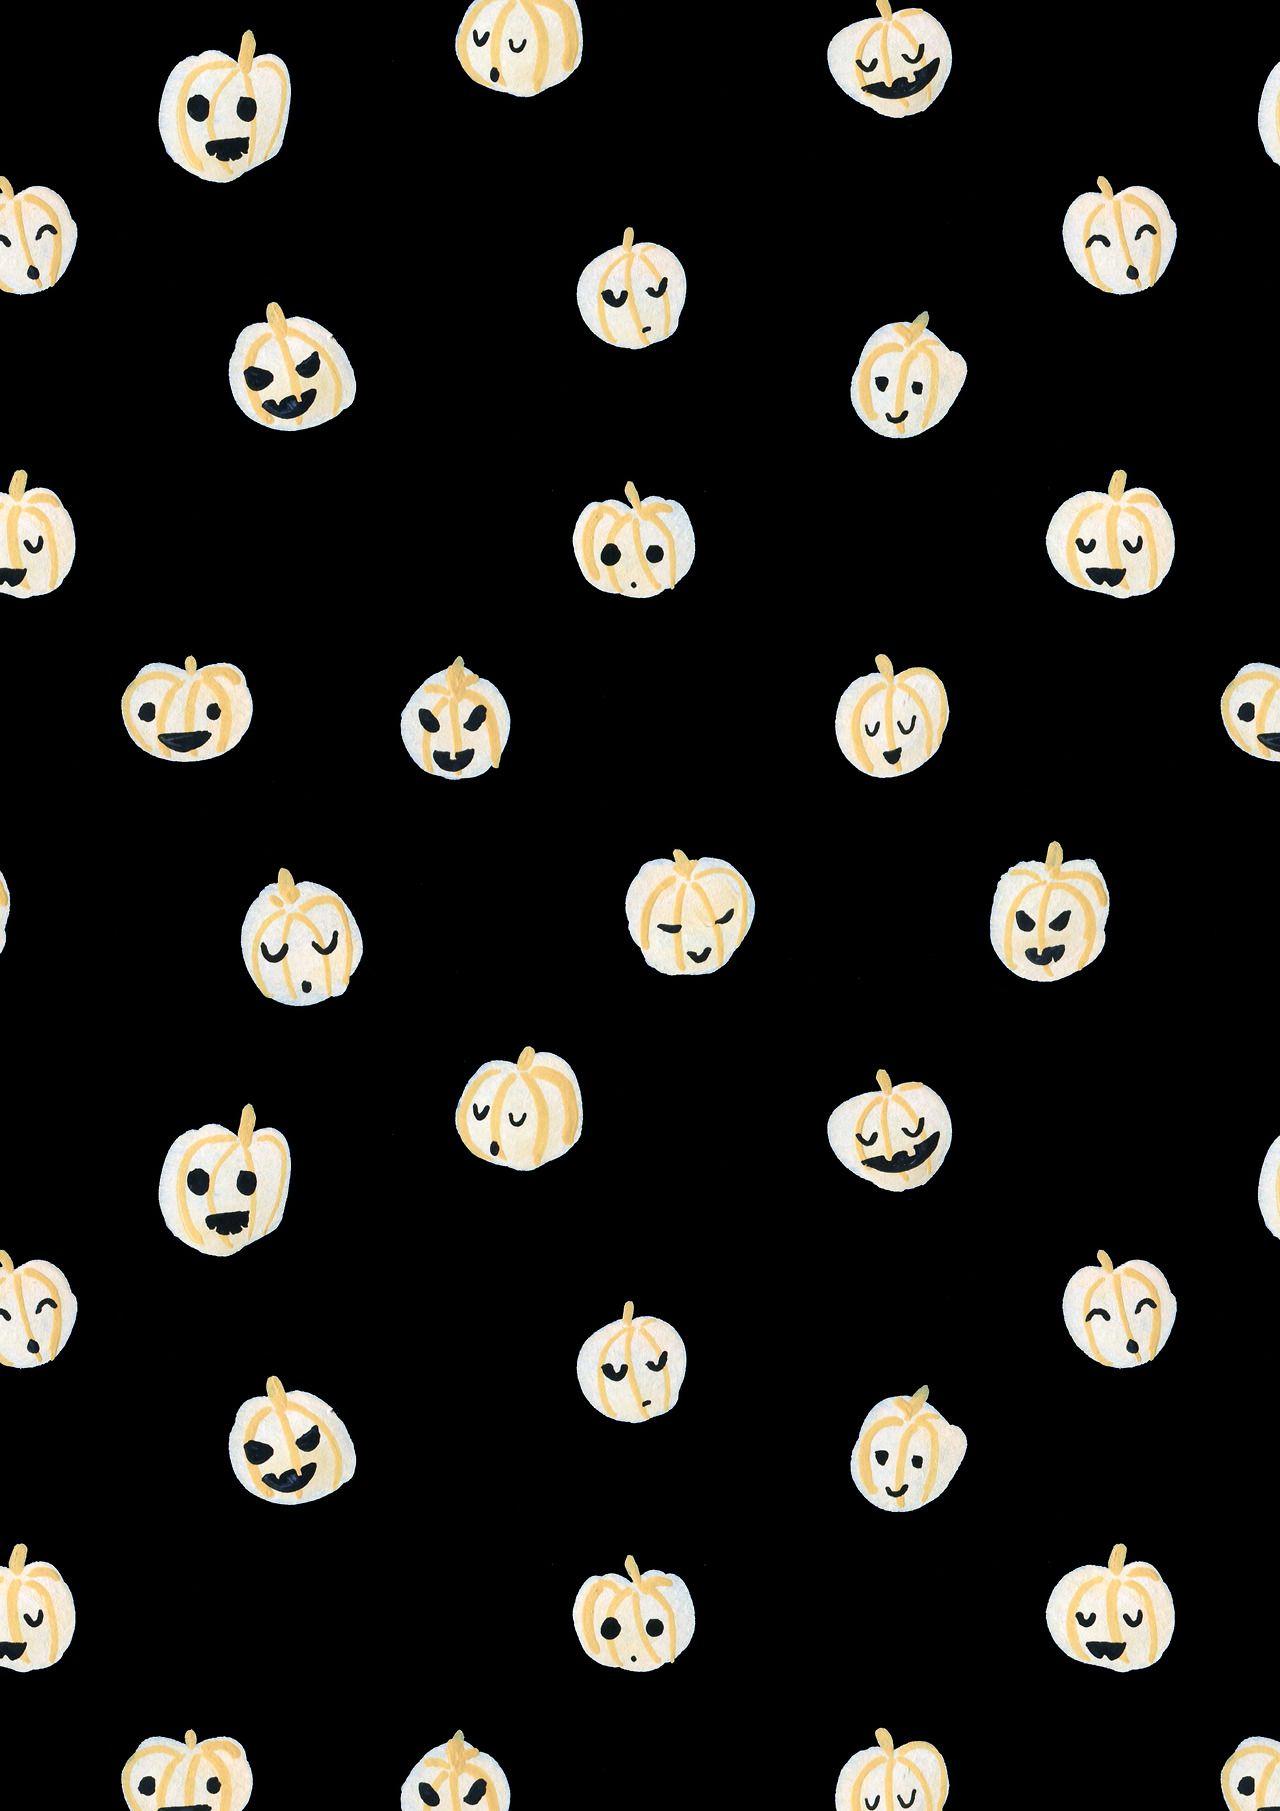 Halloween Seamless Images  Free Download on Freepik